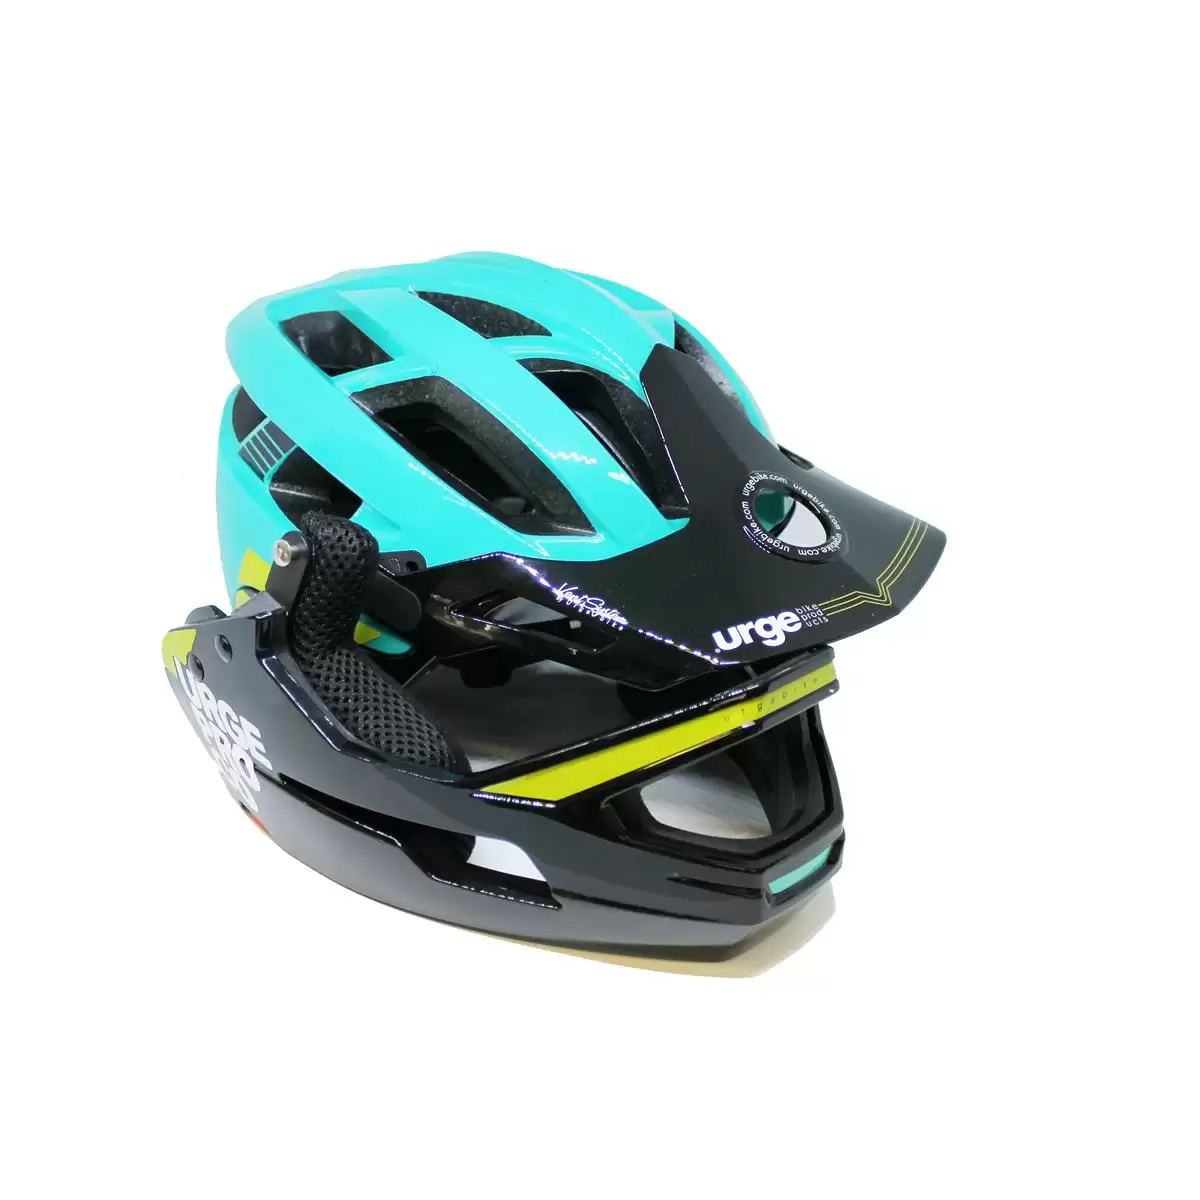 Full face helmet Gringo de la Pampa light blue size S/M (55-58) #4